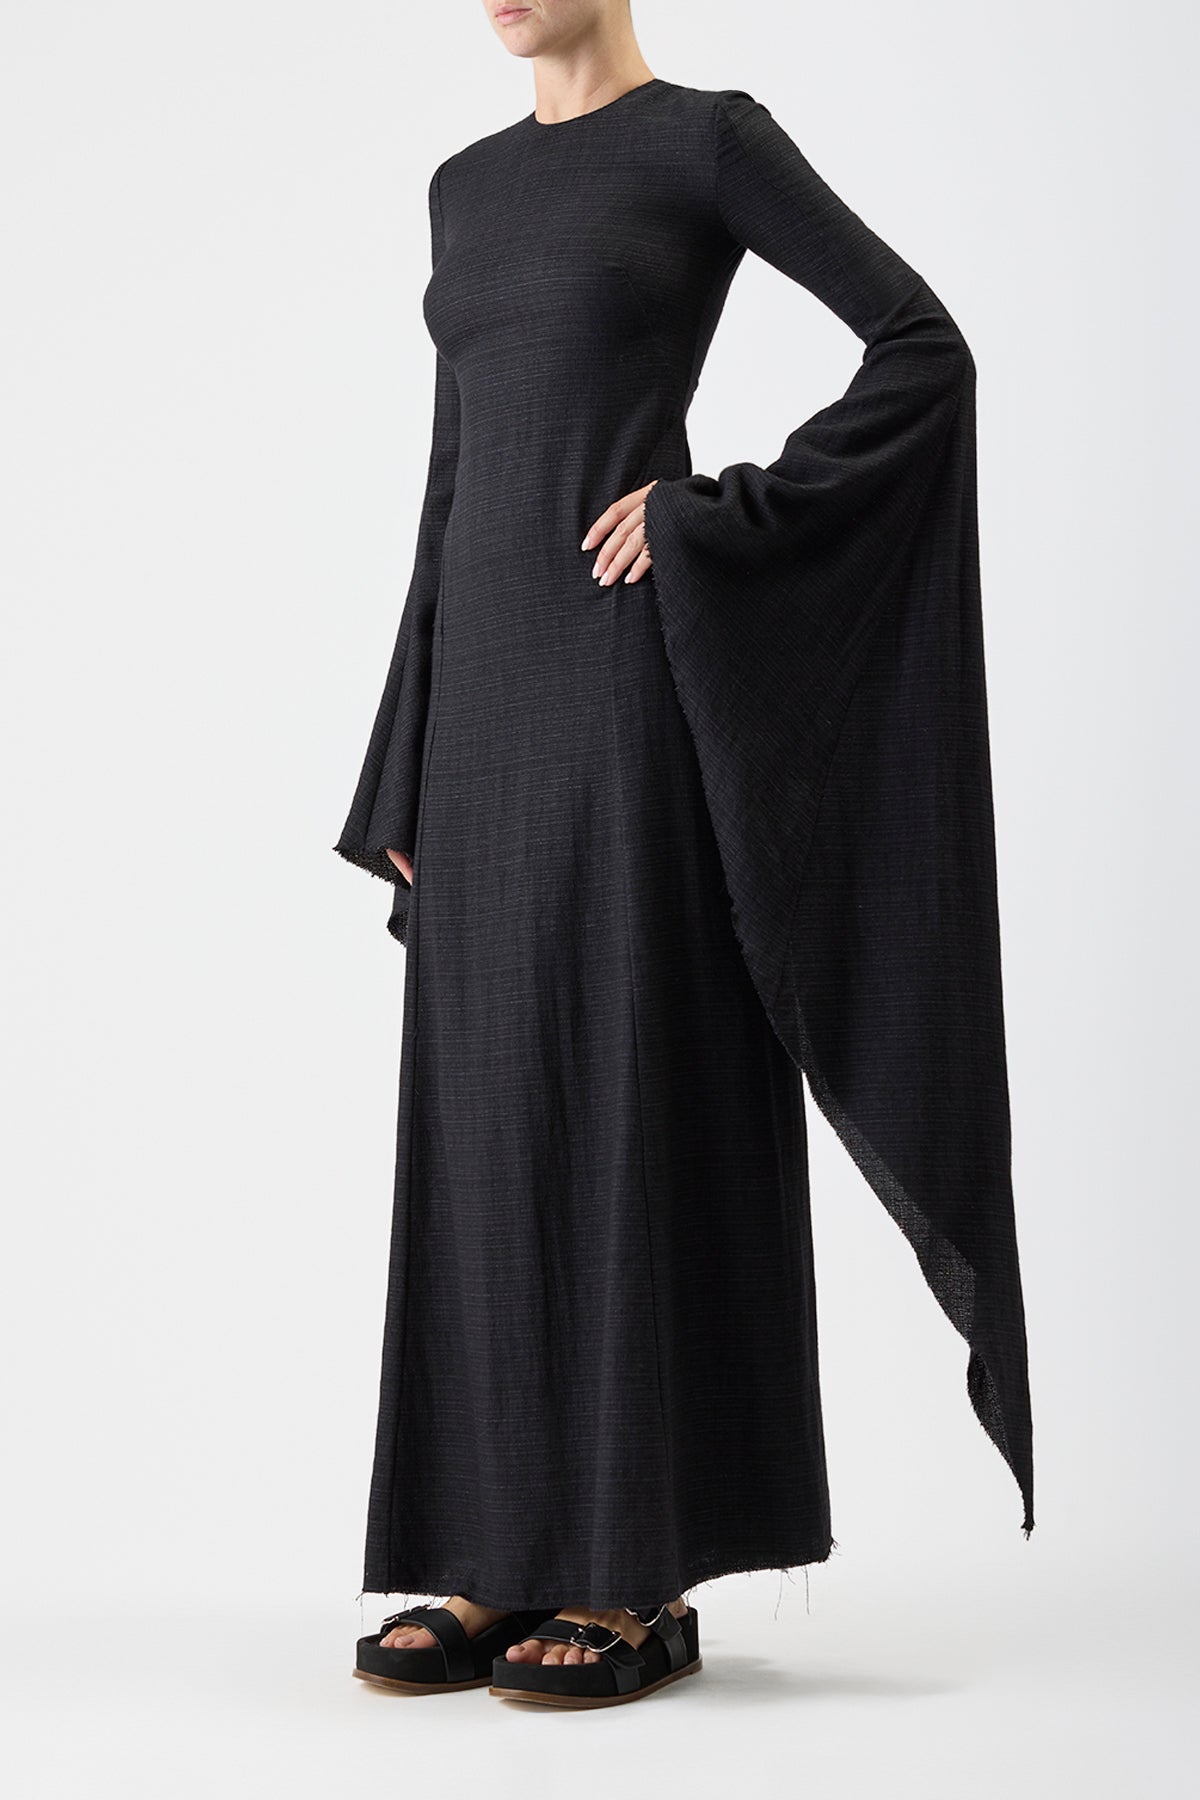 Sigrud Draped Dress in Black Silk Wool Gauze